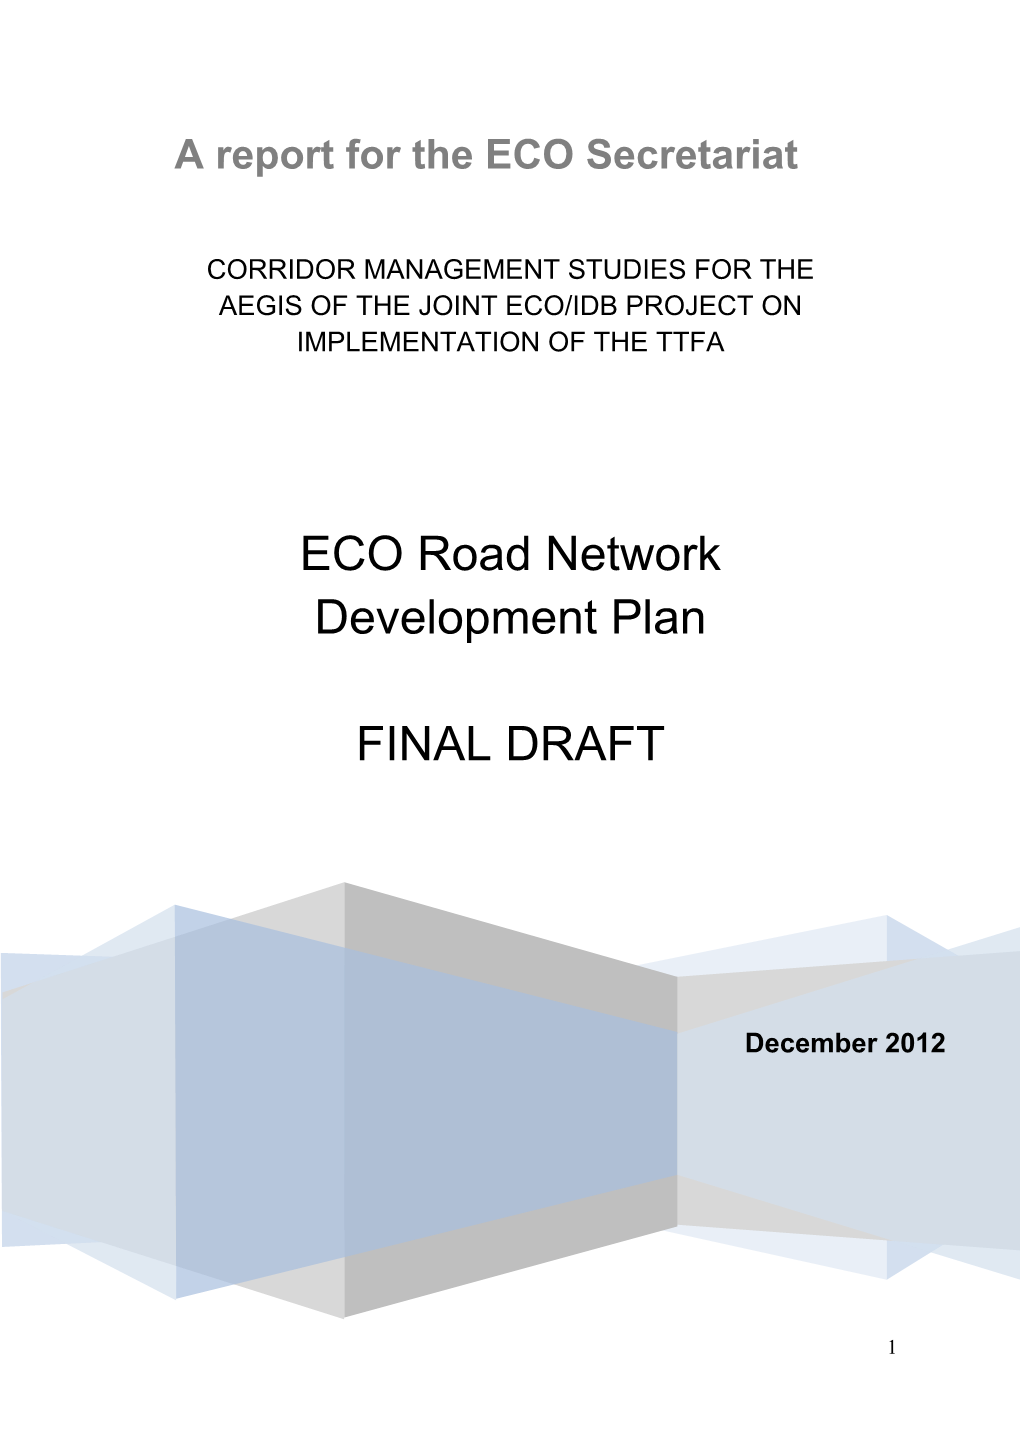 ECO Road Network Development Plan-Corridor Management Studies